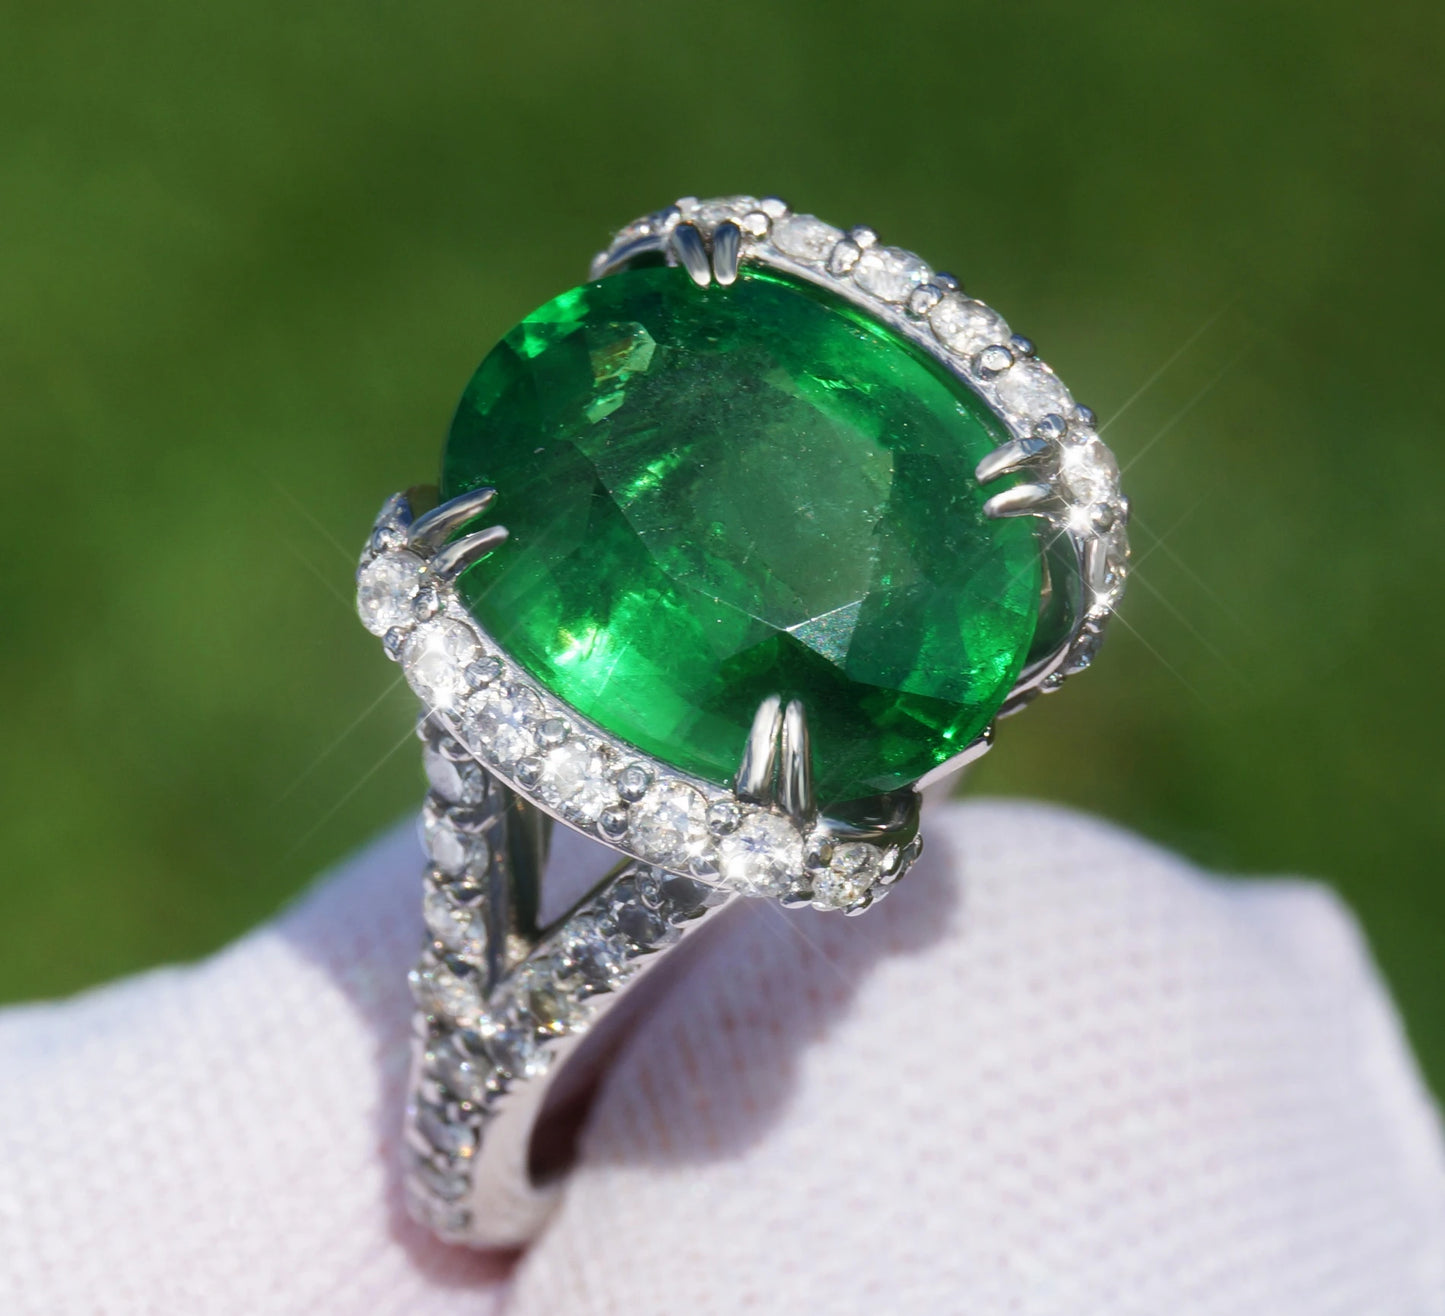 Tsavorite & diamonds ring 14k white gold green grossular garnet 6.38 ctw gia certified